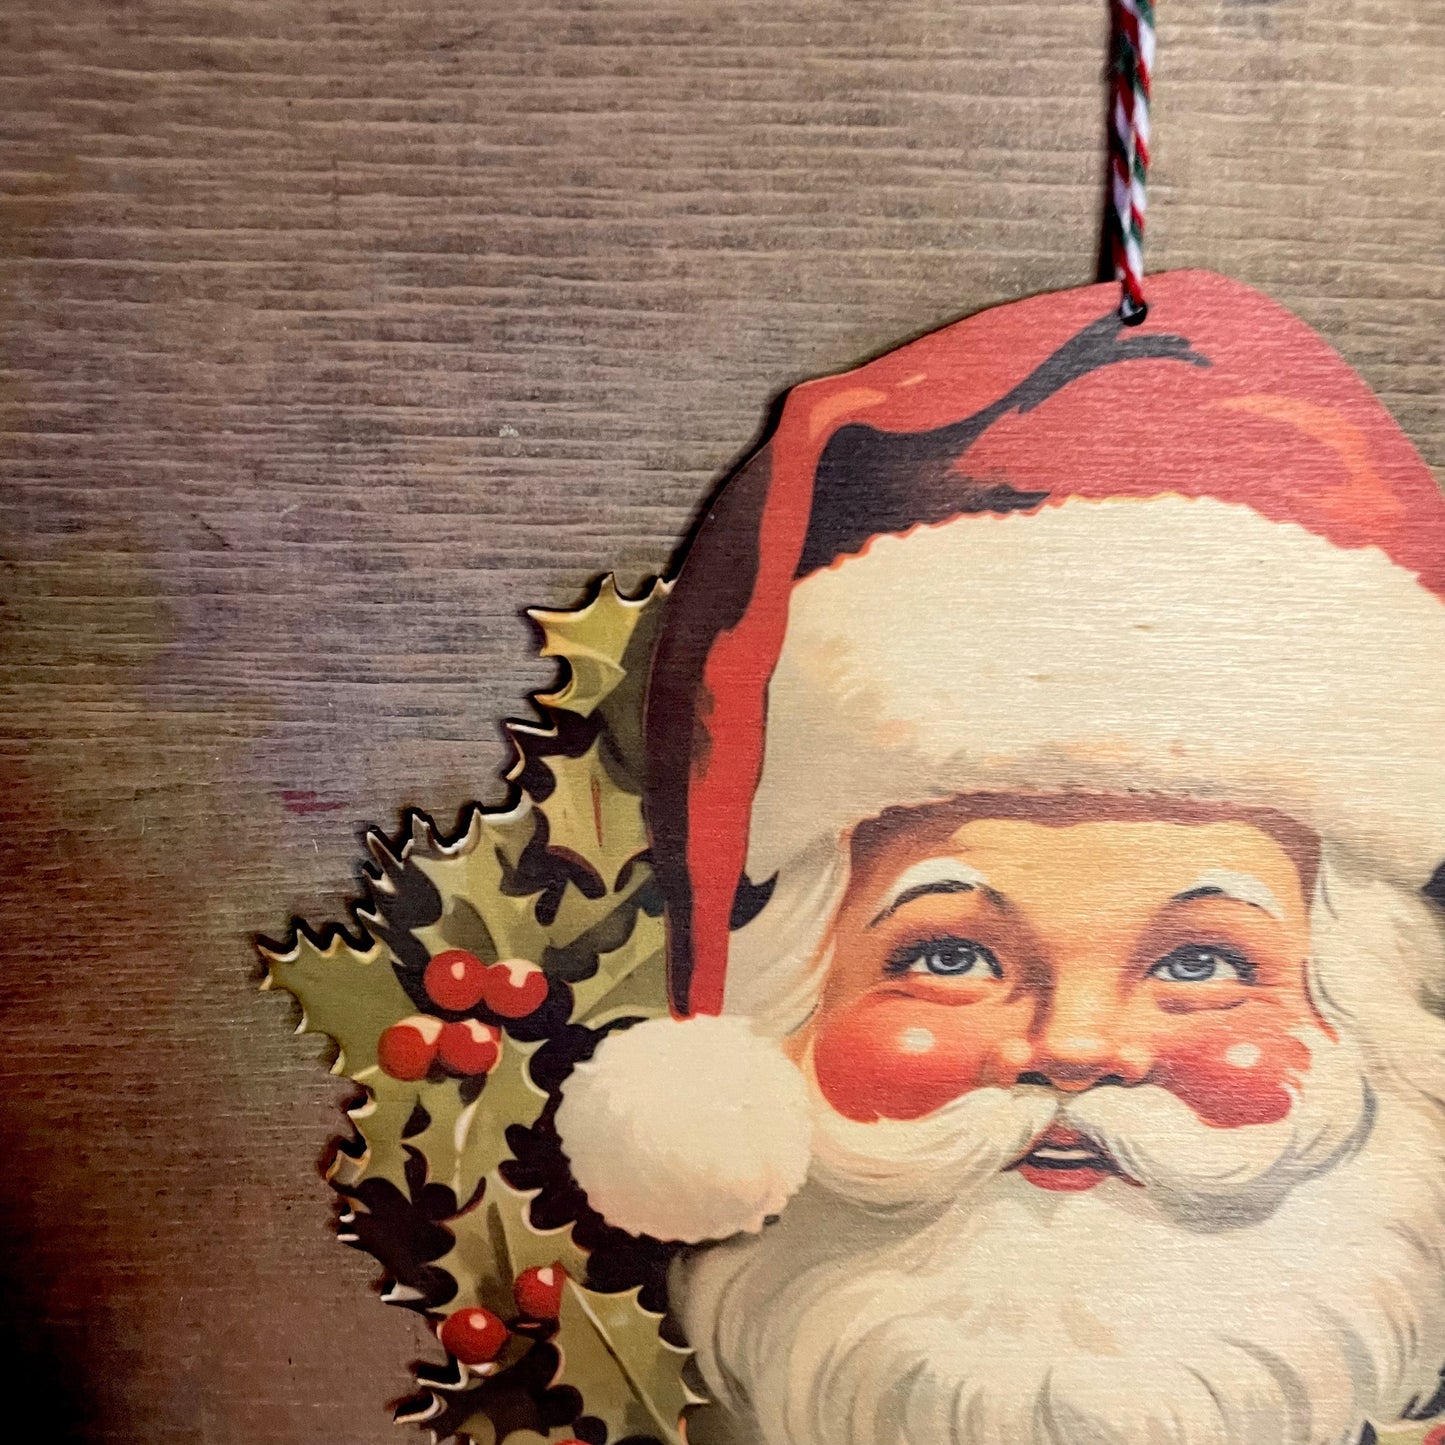 Vintage Santa Christmas Hanging Decoration, wall hanging kitsch festive decor wooden laser cut